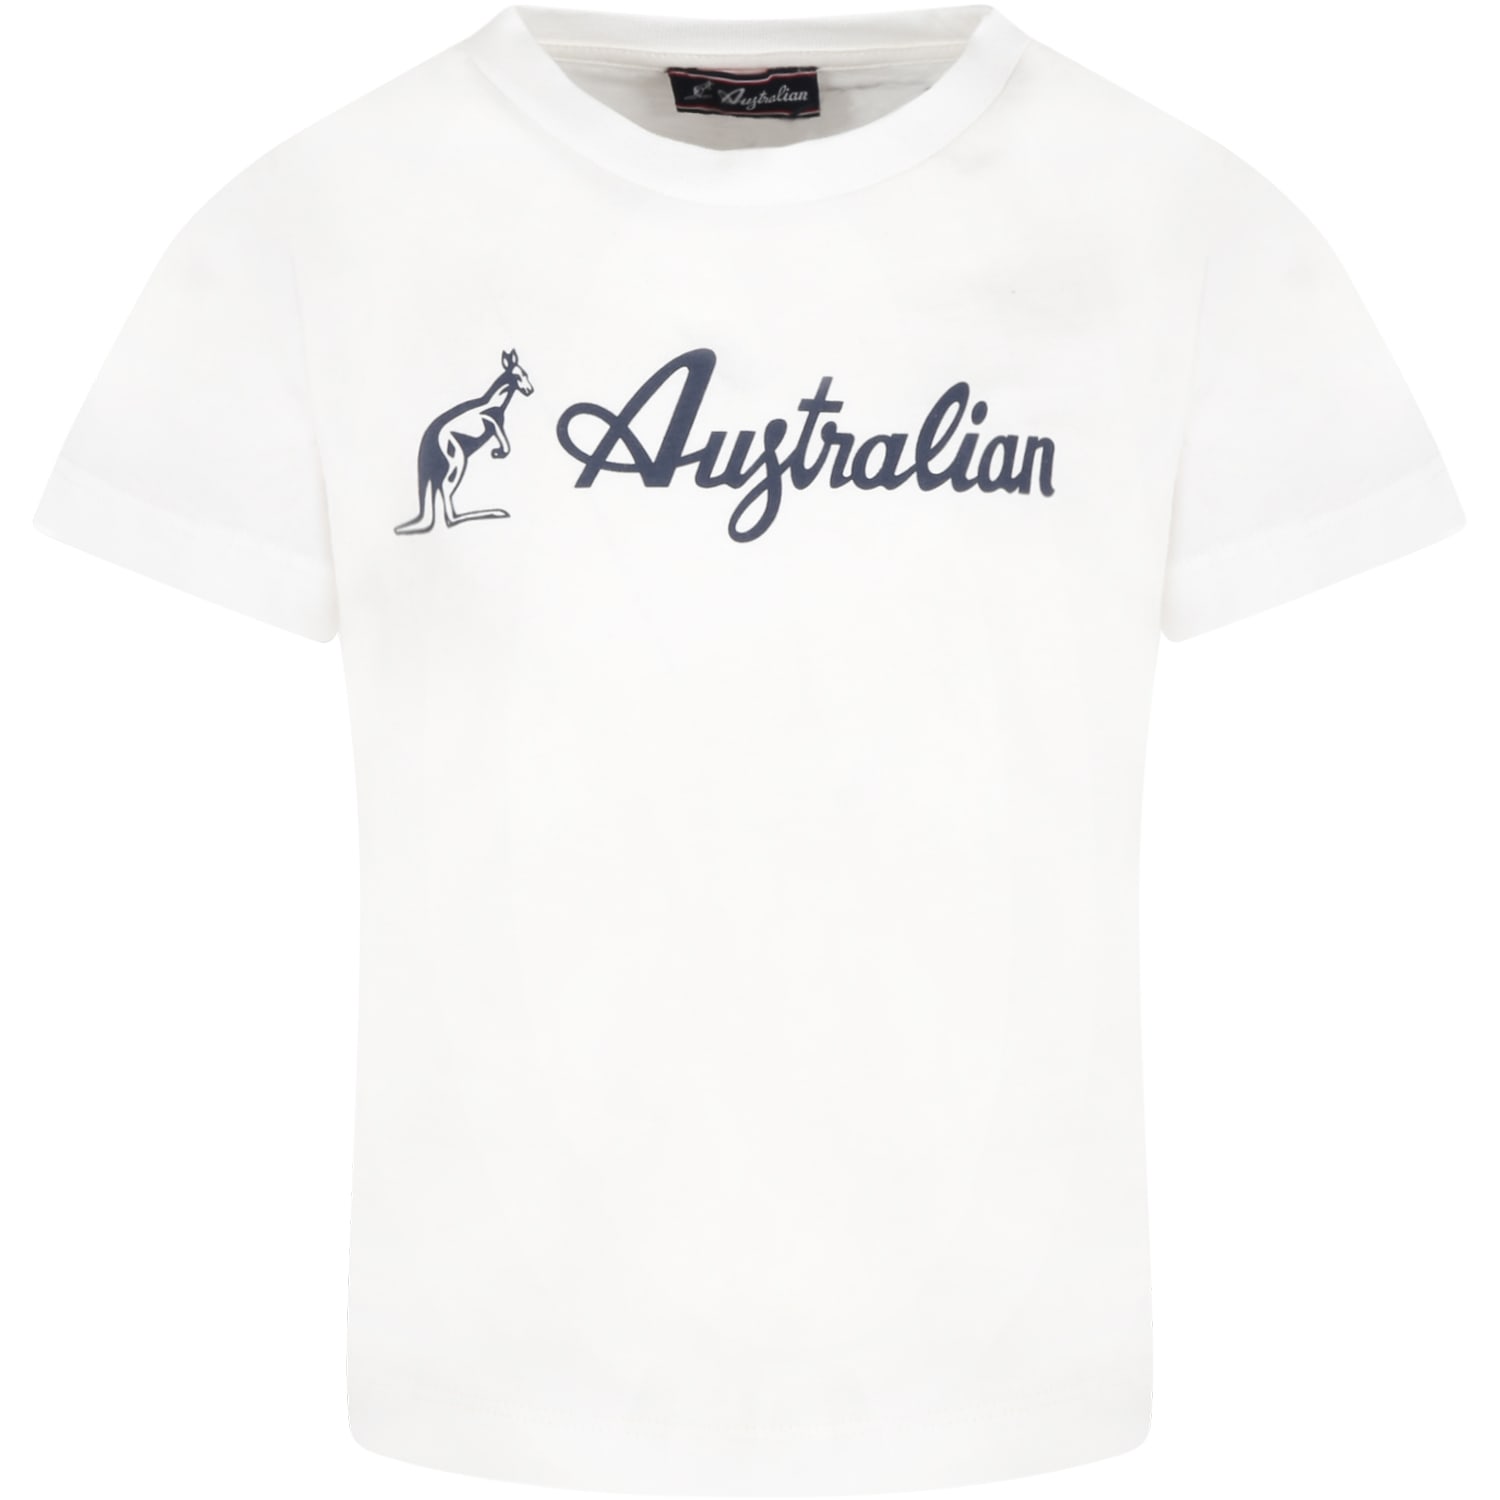 Australian White T-shirt For Boy With Logo